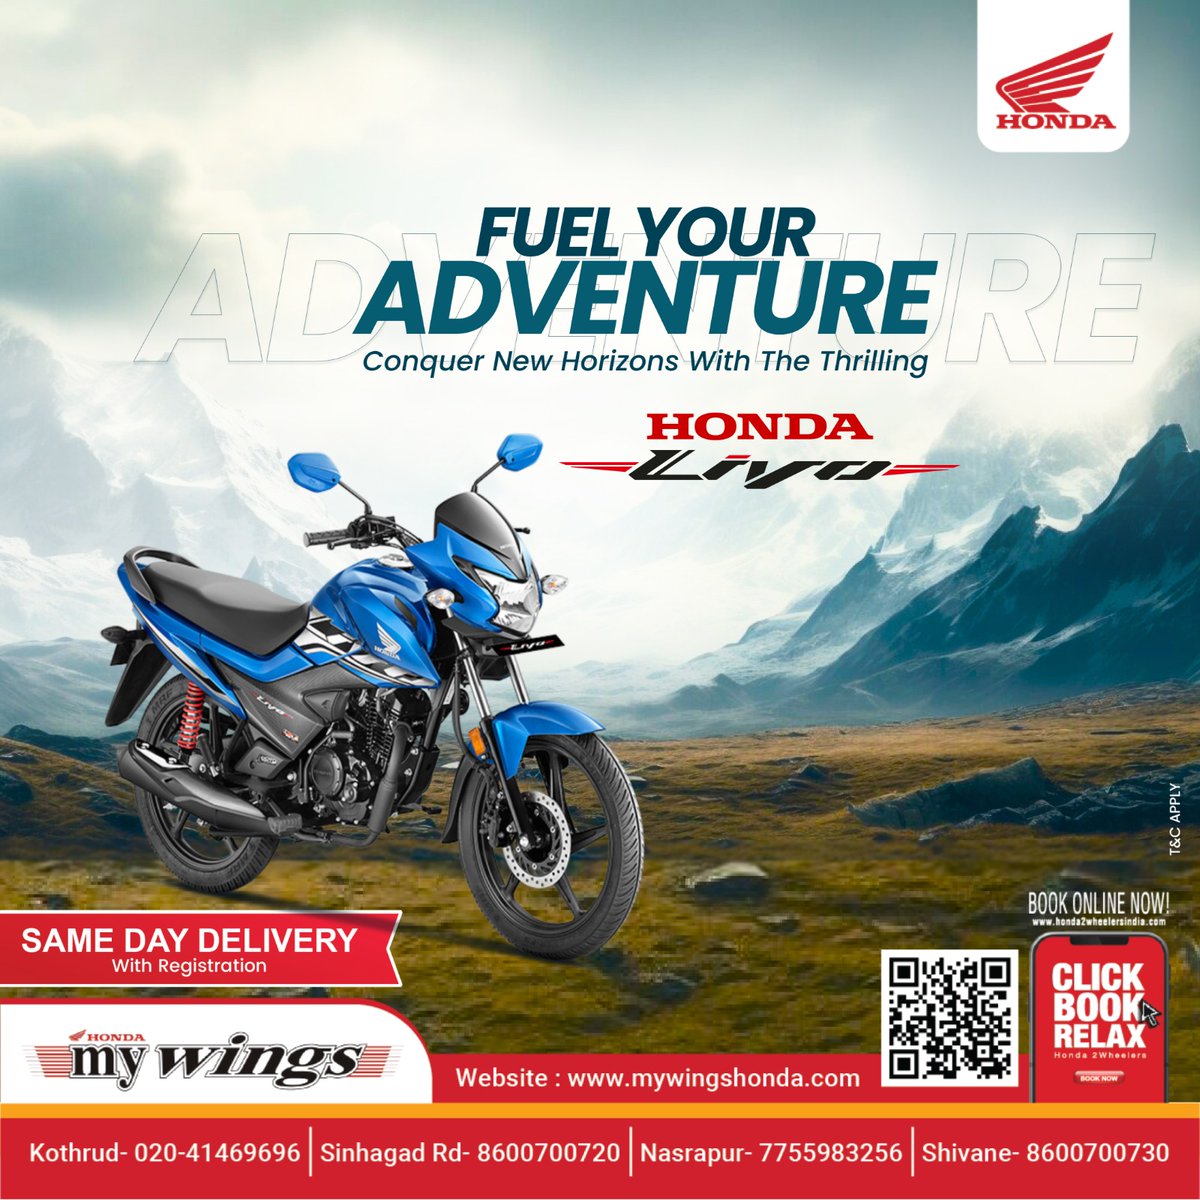 🏍️🔥 Unleash Your Adventurous Spirit with Honda! 🔥
☎  CALL US NOW 🙋‍♀️
✅Kothrud-020-41469696
✅Sinhagad Rd -8600700720
✅Nasrapur-7755983256
✅Shivane- 8600700730
.
.
.
#HondaAdventure #RideWithHonda #ConquerNewHorizons #TwoWheelsOneDream #ExploreWithHonda #HondaMotorcycles